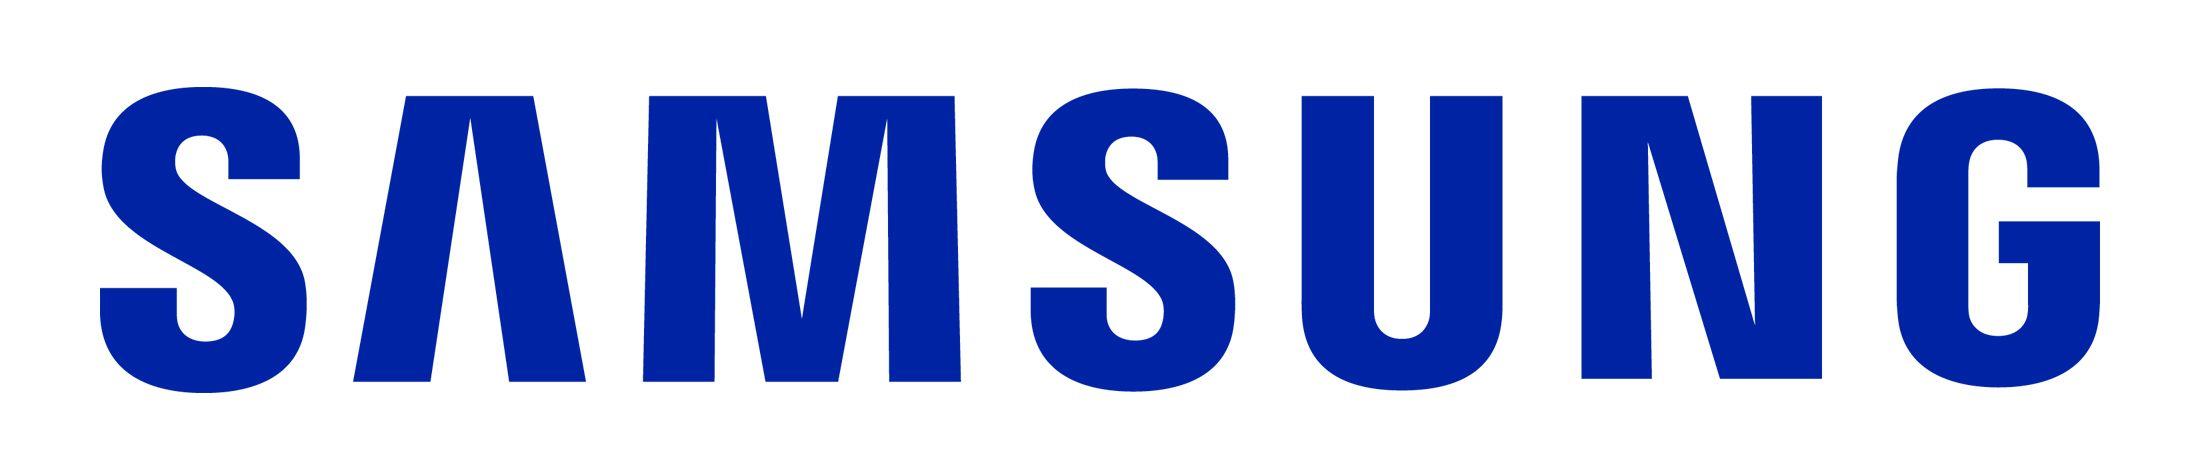 Small Samsung Logo - ADDING MULTIMEDIA Samsung Gear S3 Smartwatch Blends Distinctive